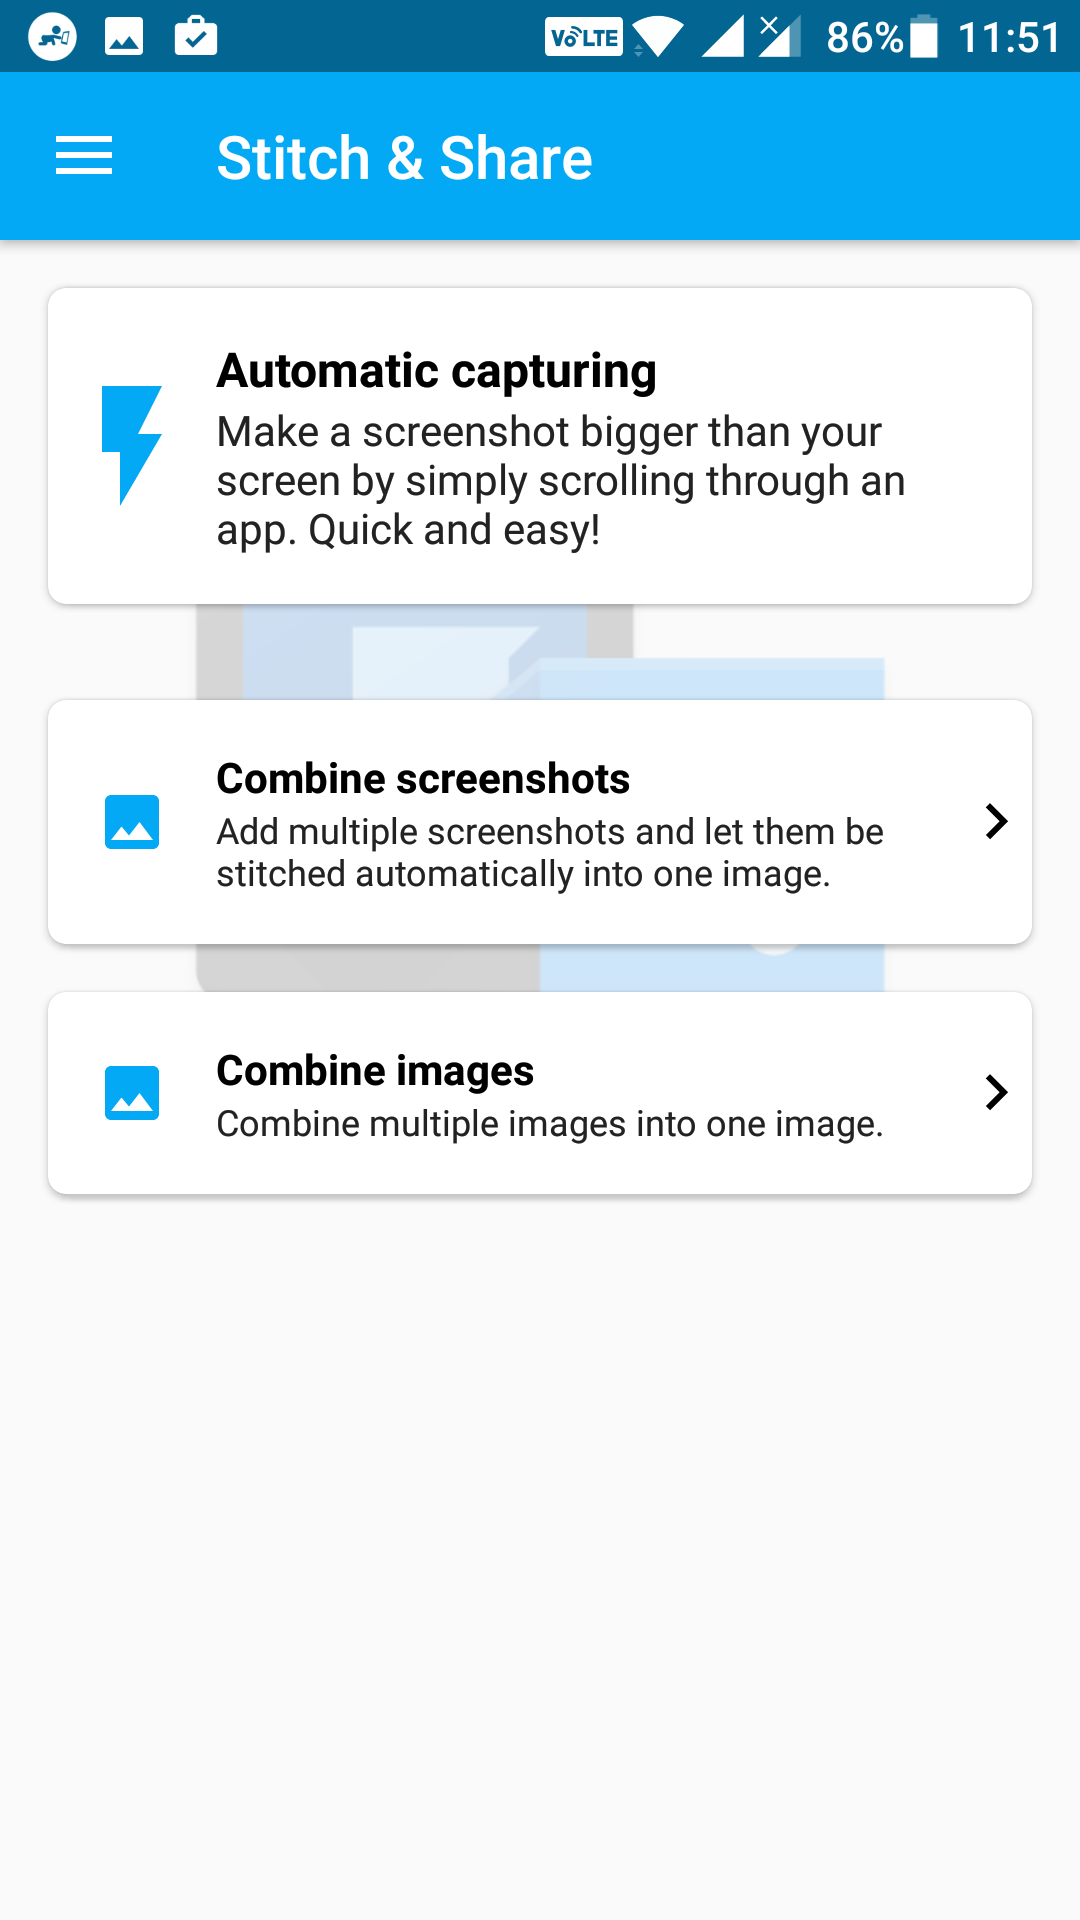 scrolling-screenshots-automatic